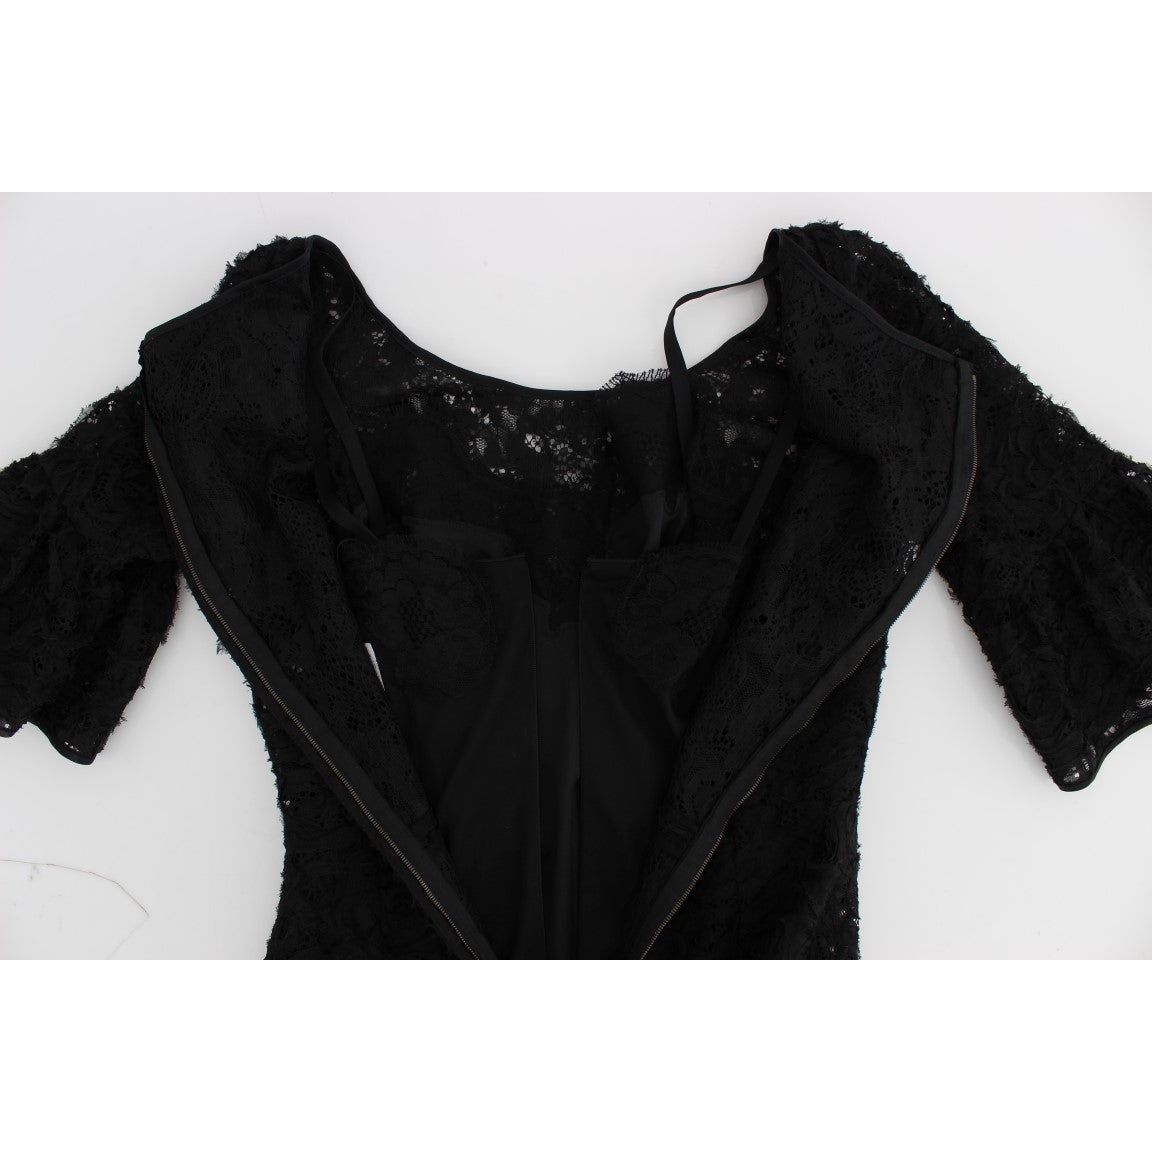 Dolce & Gabbana Elegant Black Floral Lace Maxi Dress black-floral-lace-long-bodycon-maxi-dress